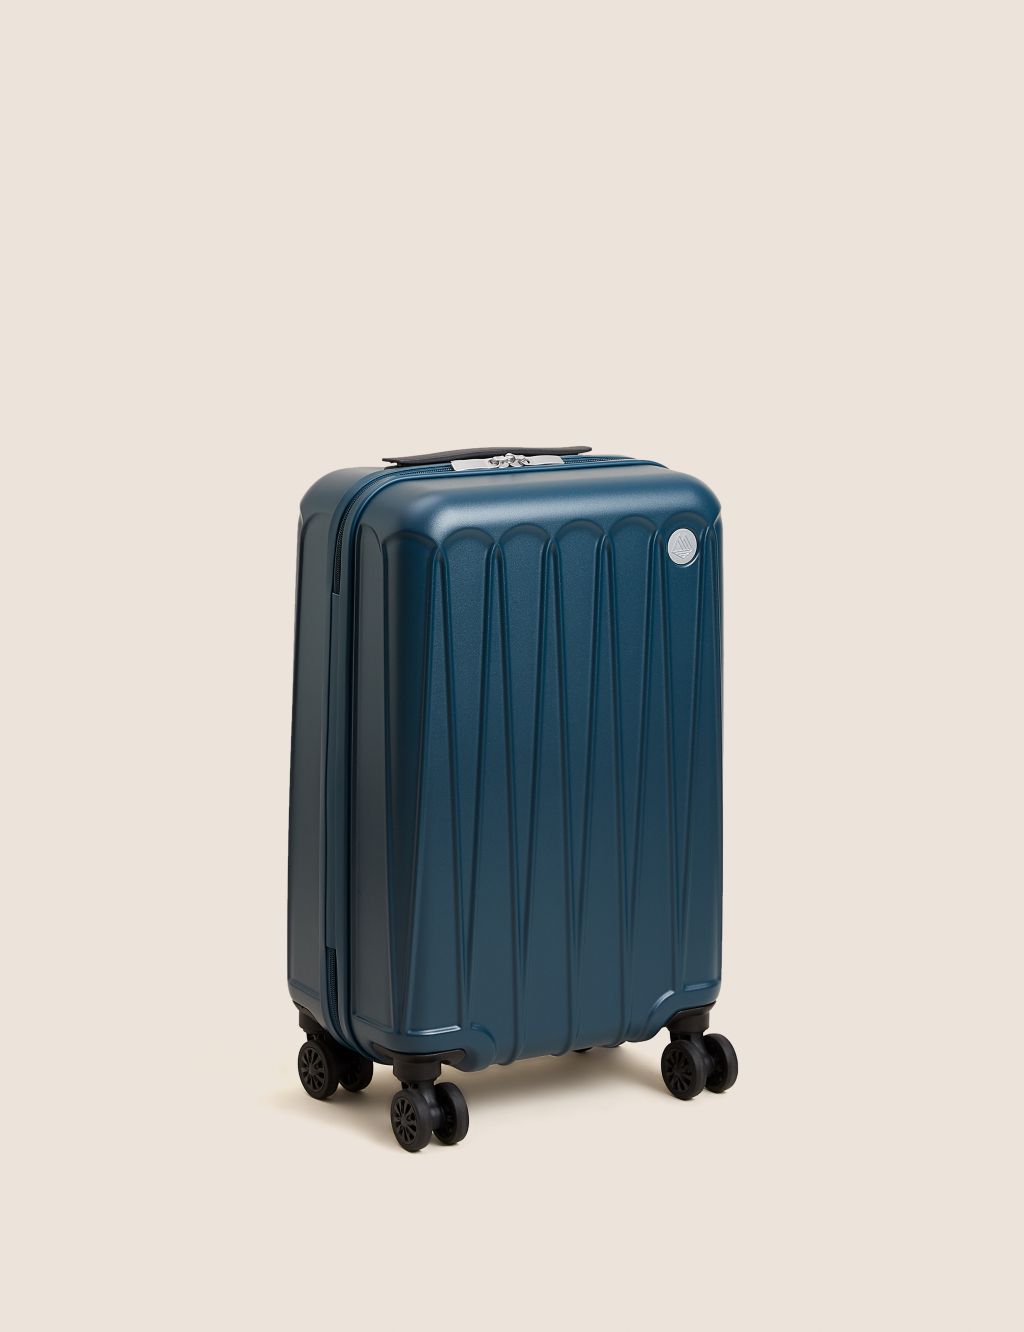 Amalfi 4 Wheel Hard Shell Cabin Suitcase image 1